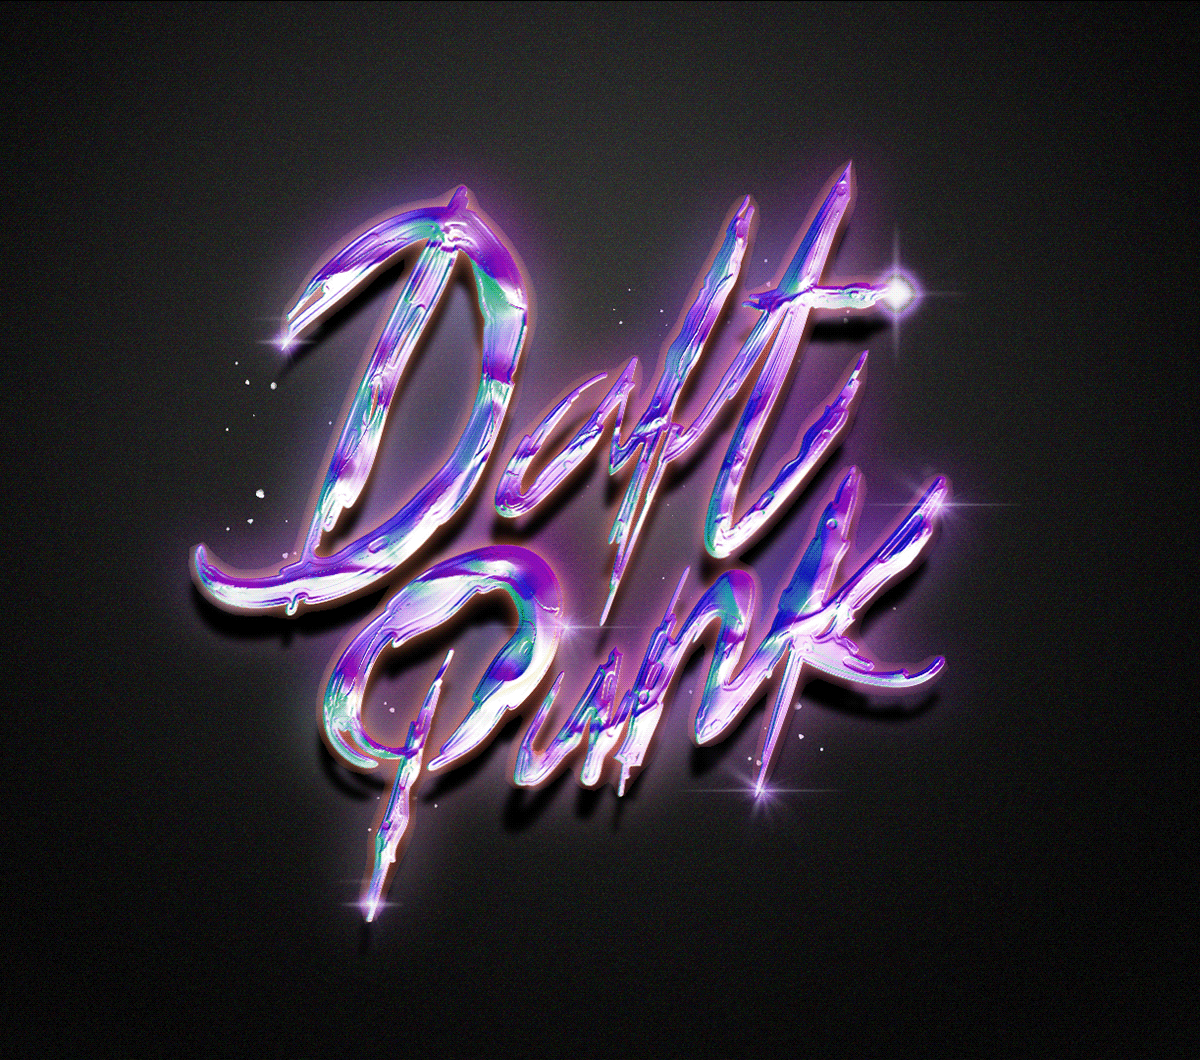 2020 Design 2021 design Collection daft punk experimental lettering typography   Digital Art  retro design Retro Futurism